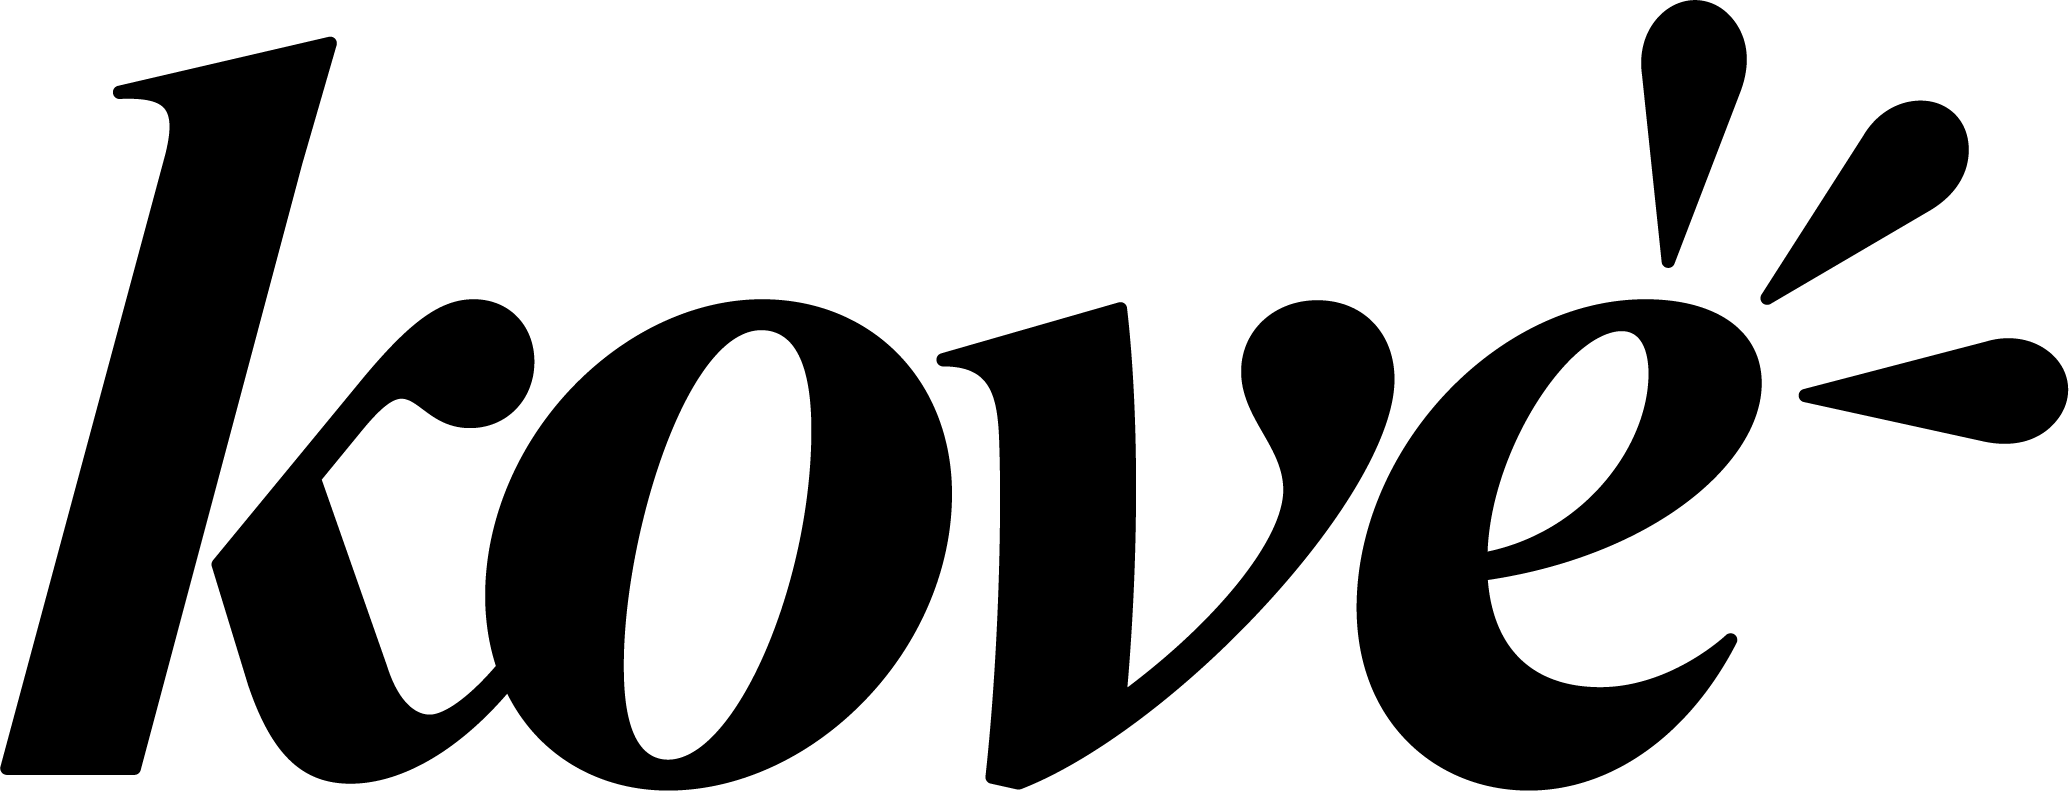 Logo Kove